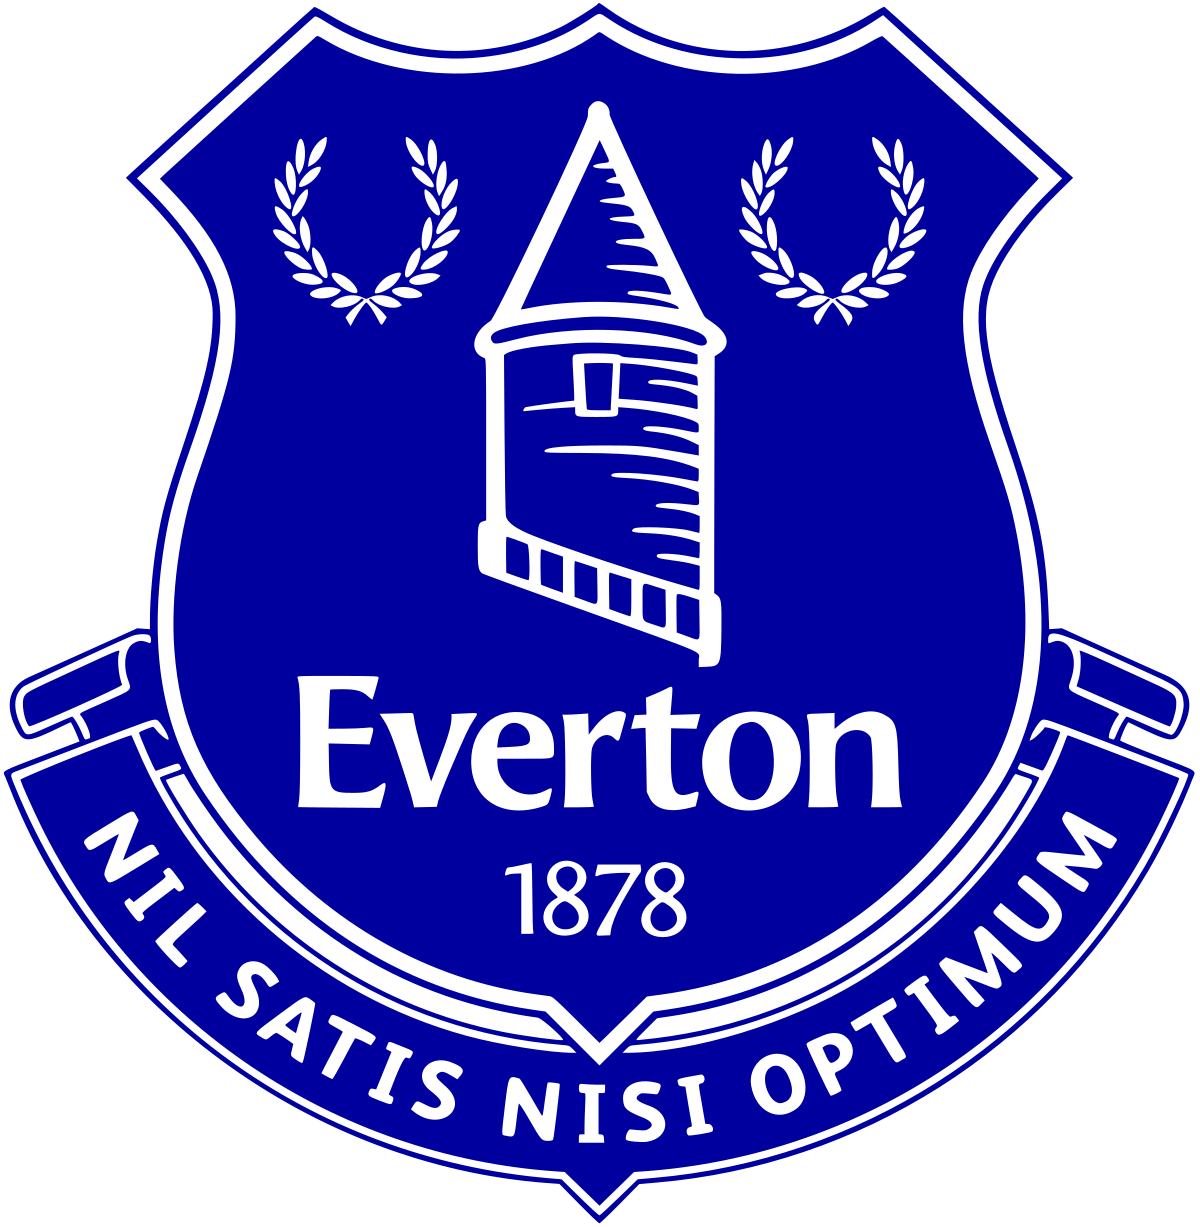 Everton F.C. - Wikipedia